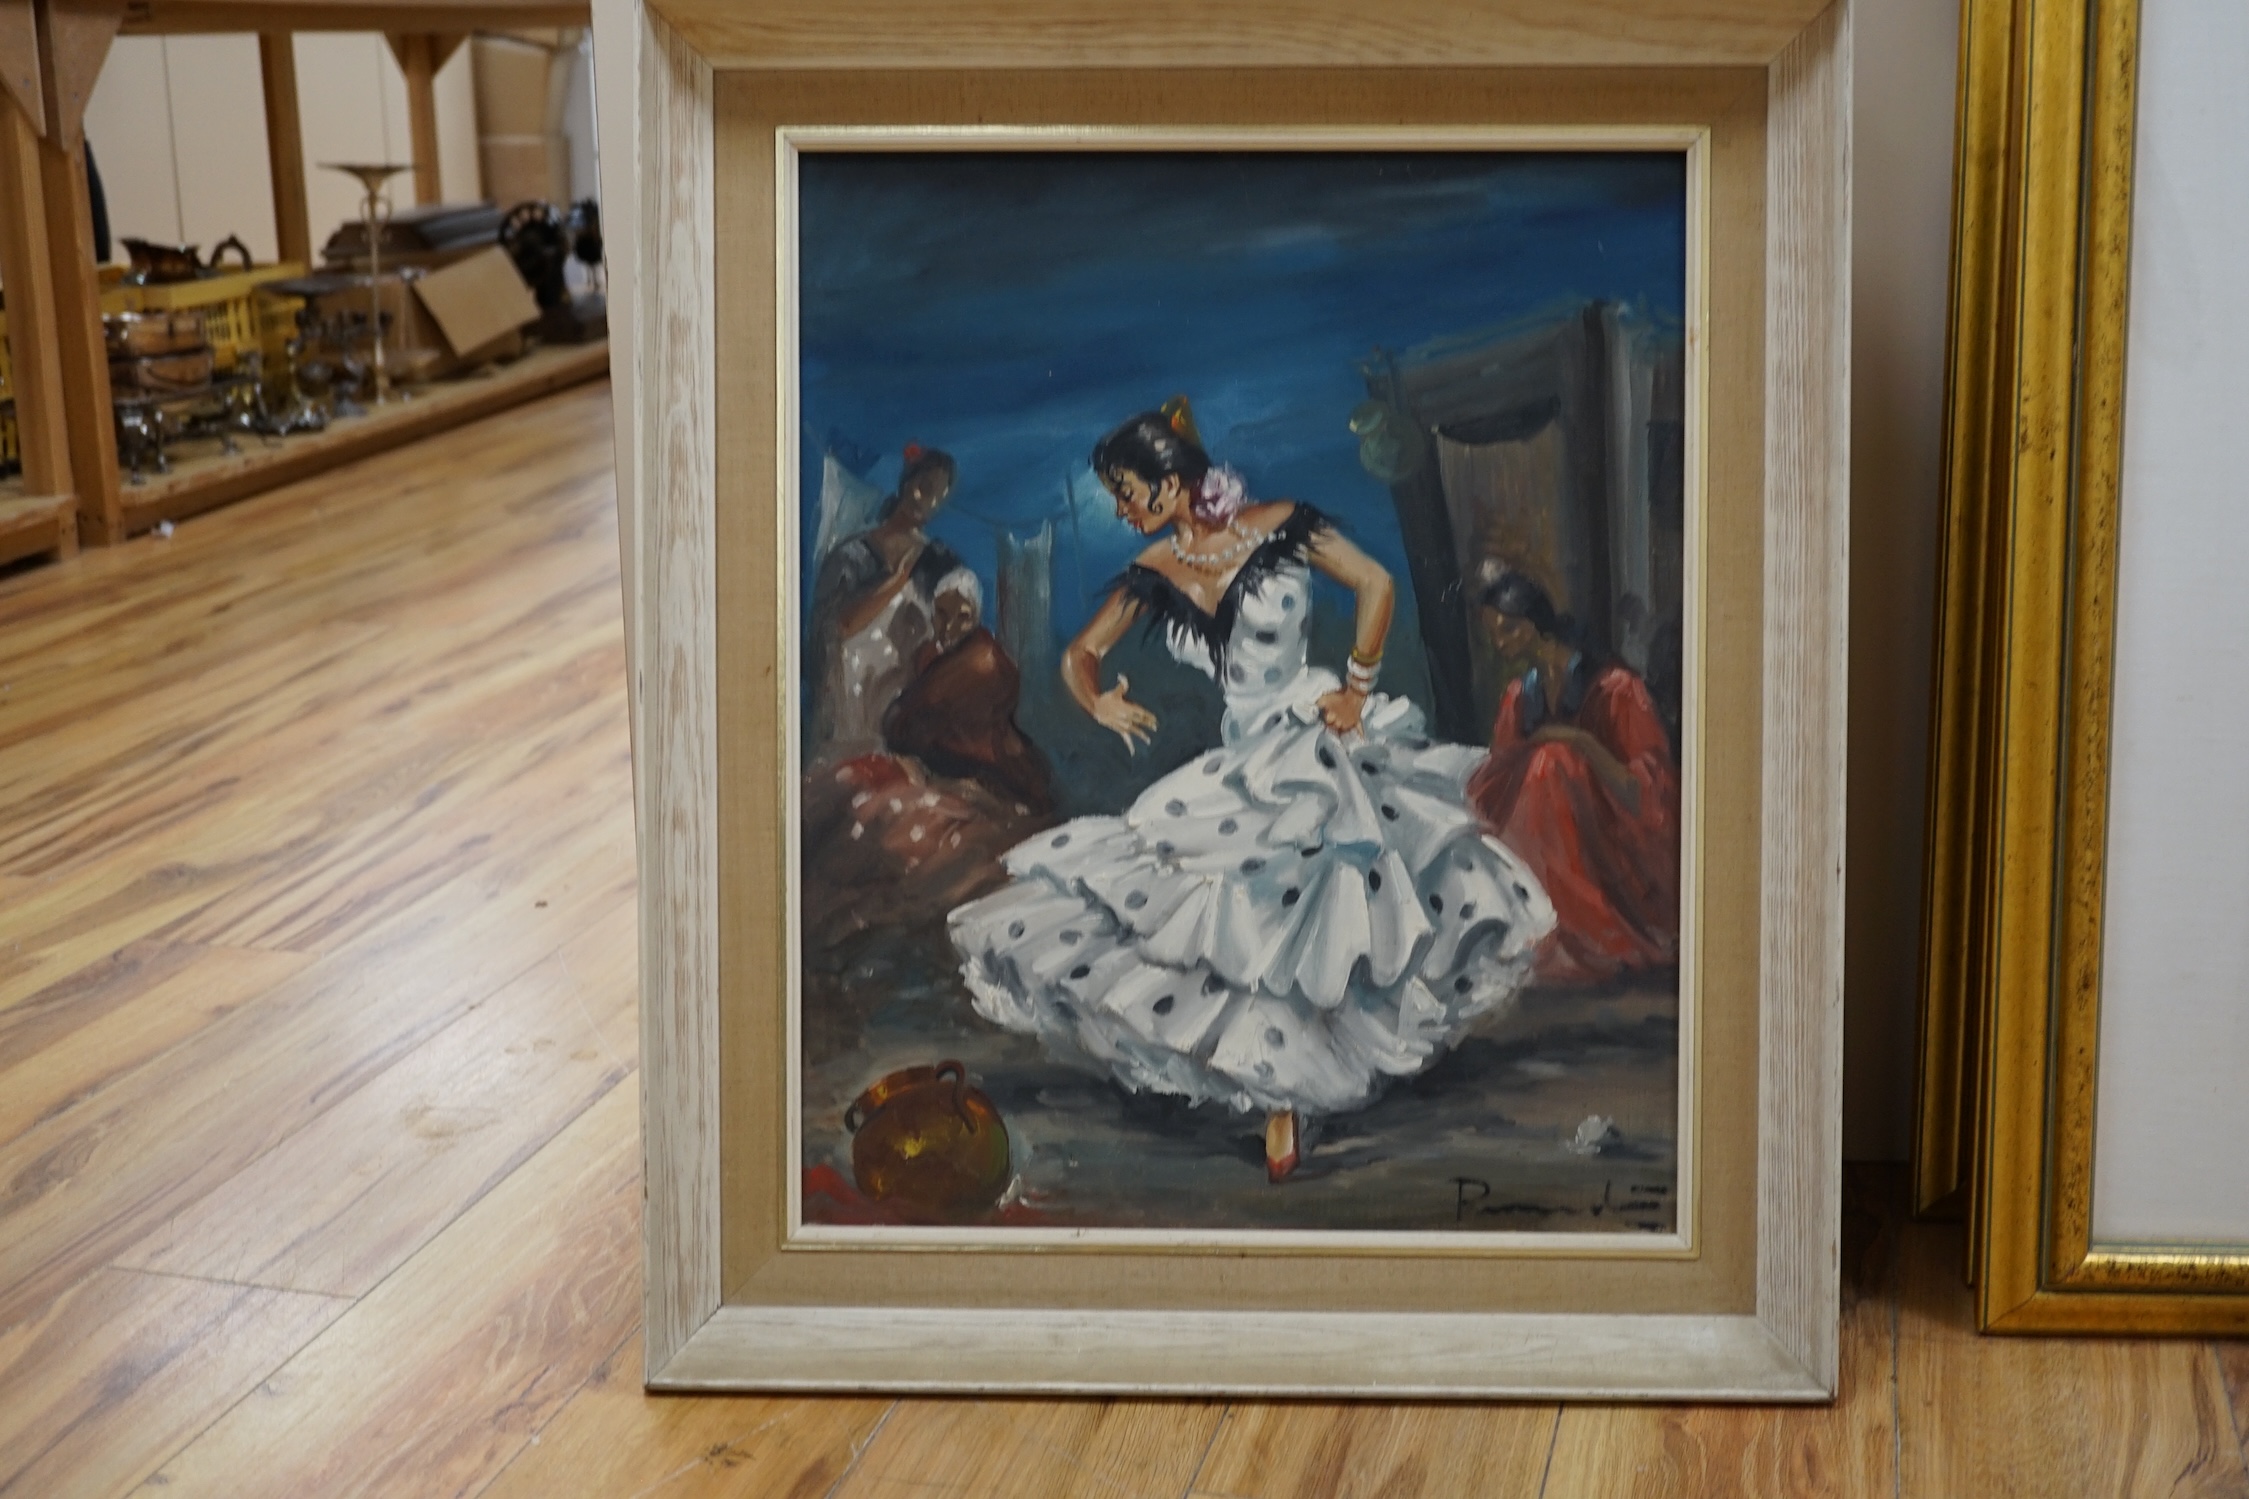 Spanish School, oil on canvas, Flamenco dancer, 55 x 45cm. Condition - fair, canvas sagging slightly